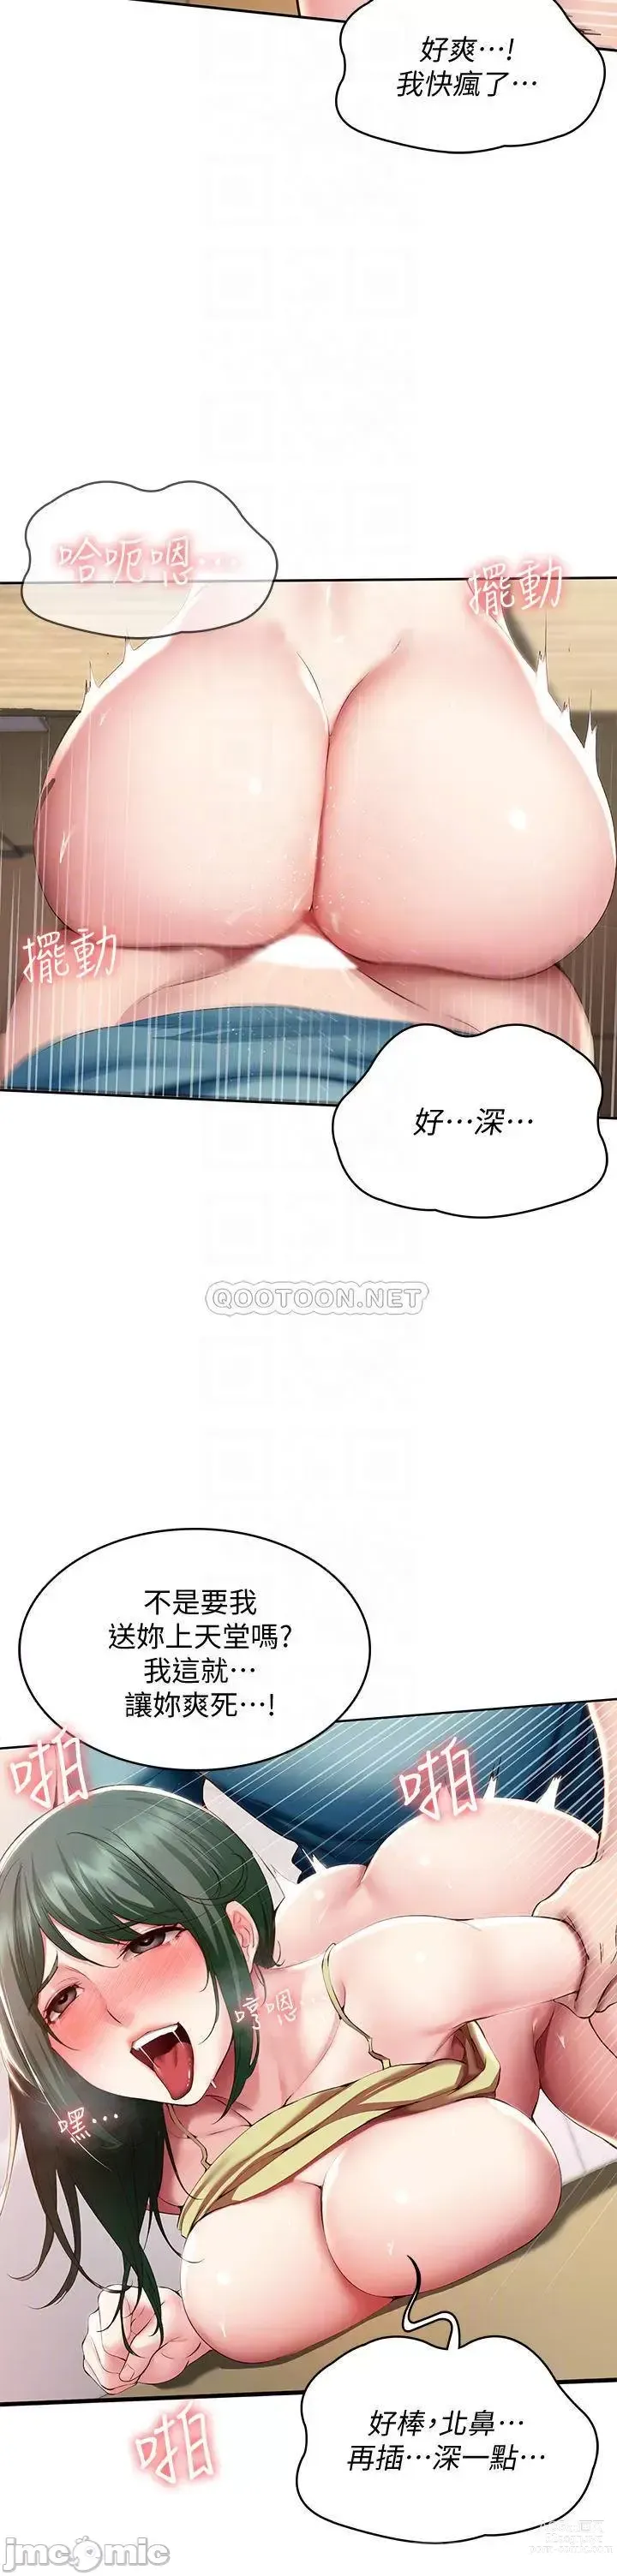 Page 6 of doujinshi 韩漫足交情节汇总5